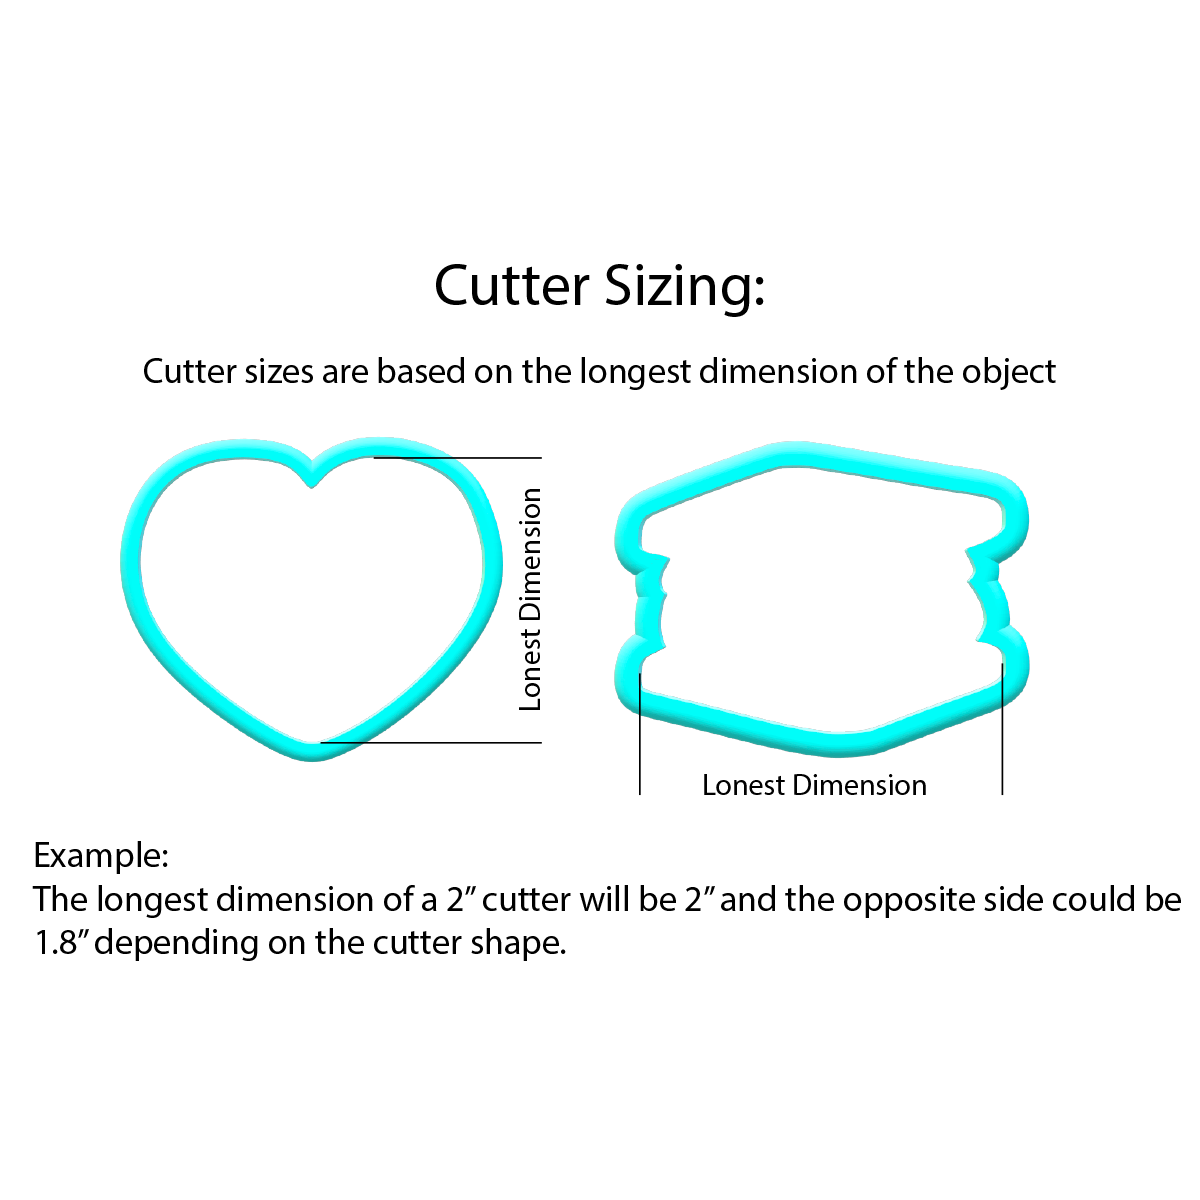 Penguin Cookie Cutter Set | STL File